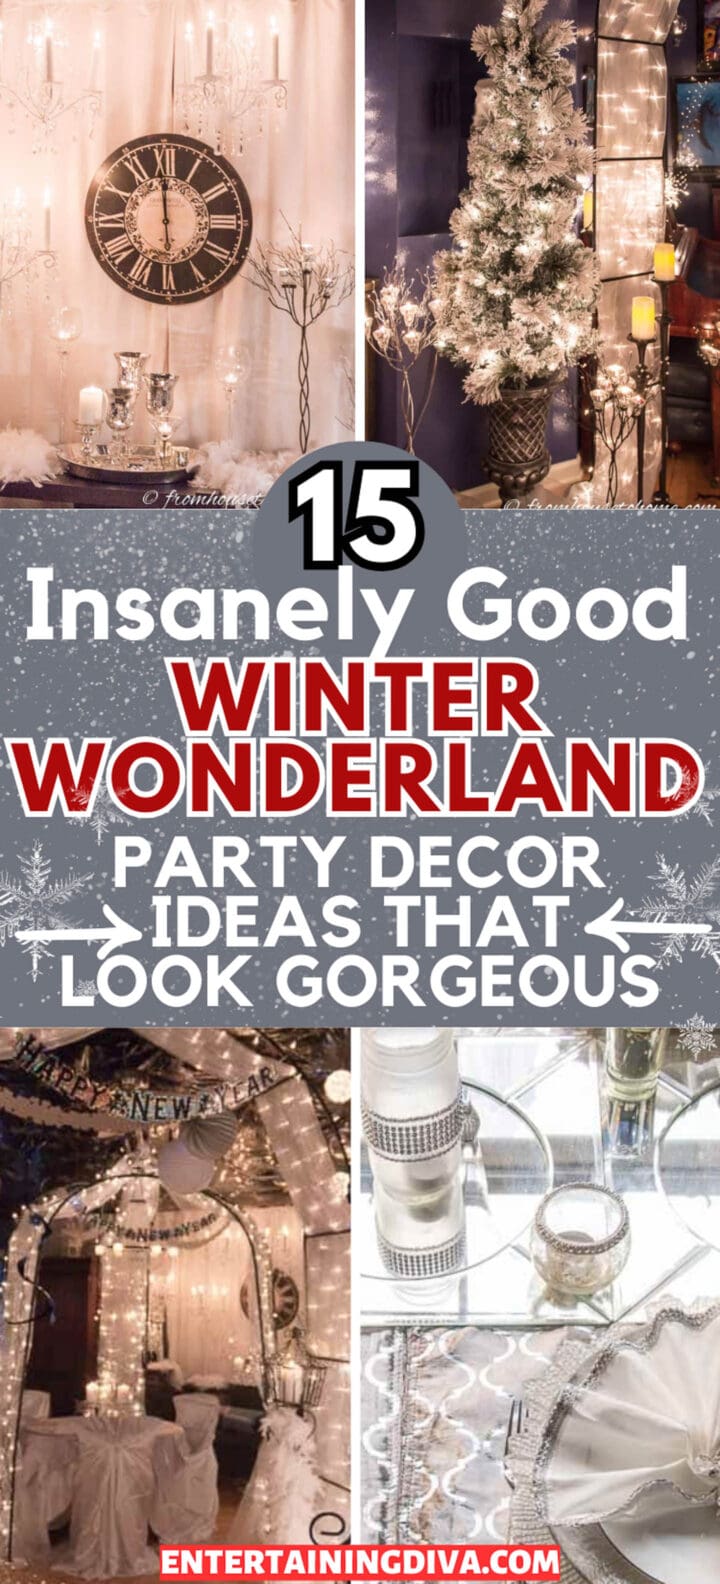 15 amazing winter wonderland party decor ideas.